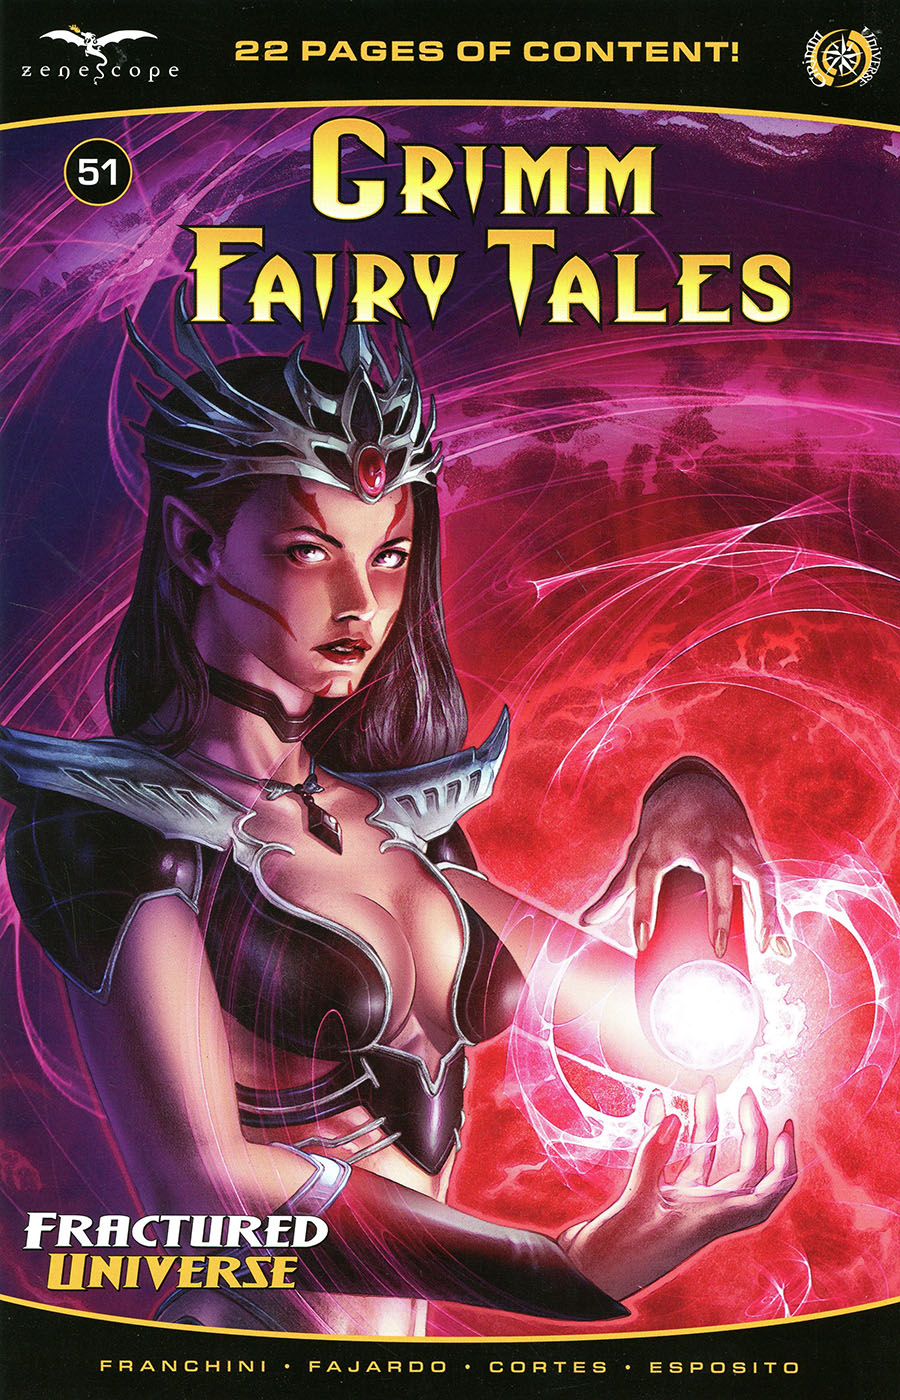 Grimm Fairy Tales Vol 2 #51 Cover D Geebo Vigonte